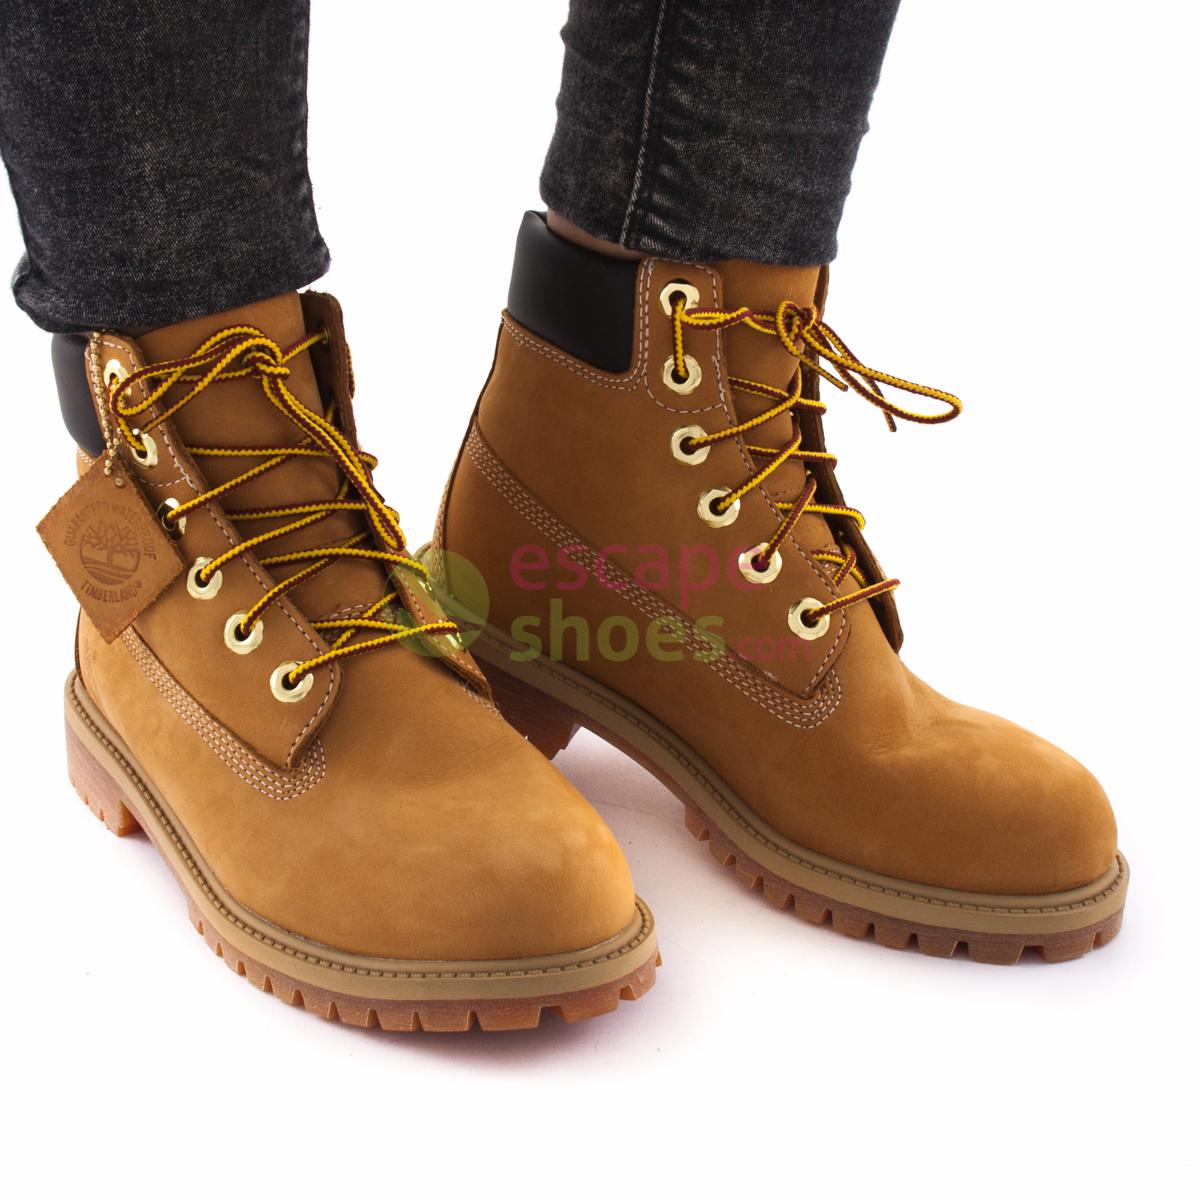 premium 6 inch boot for juniors in yellow